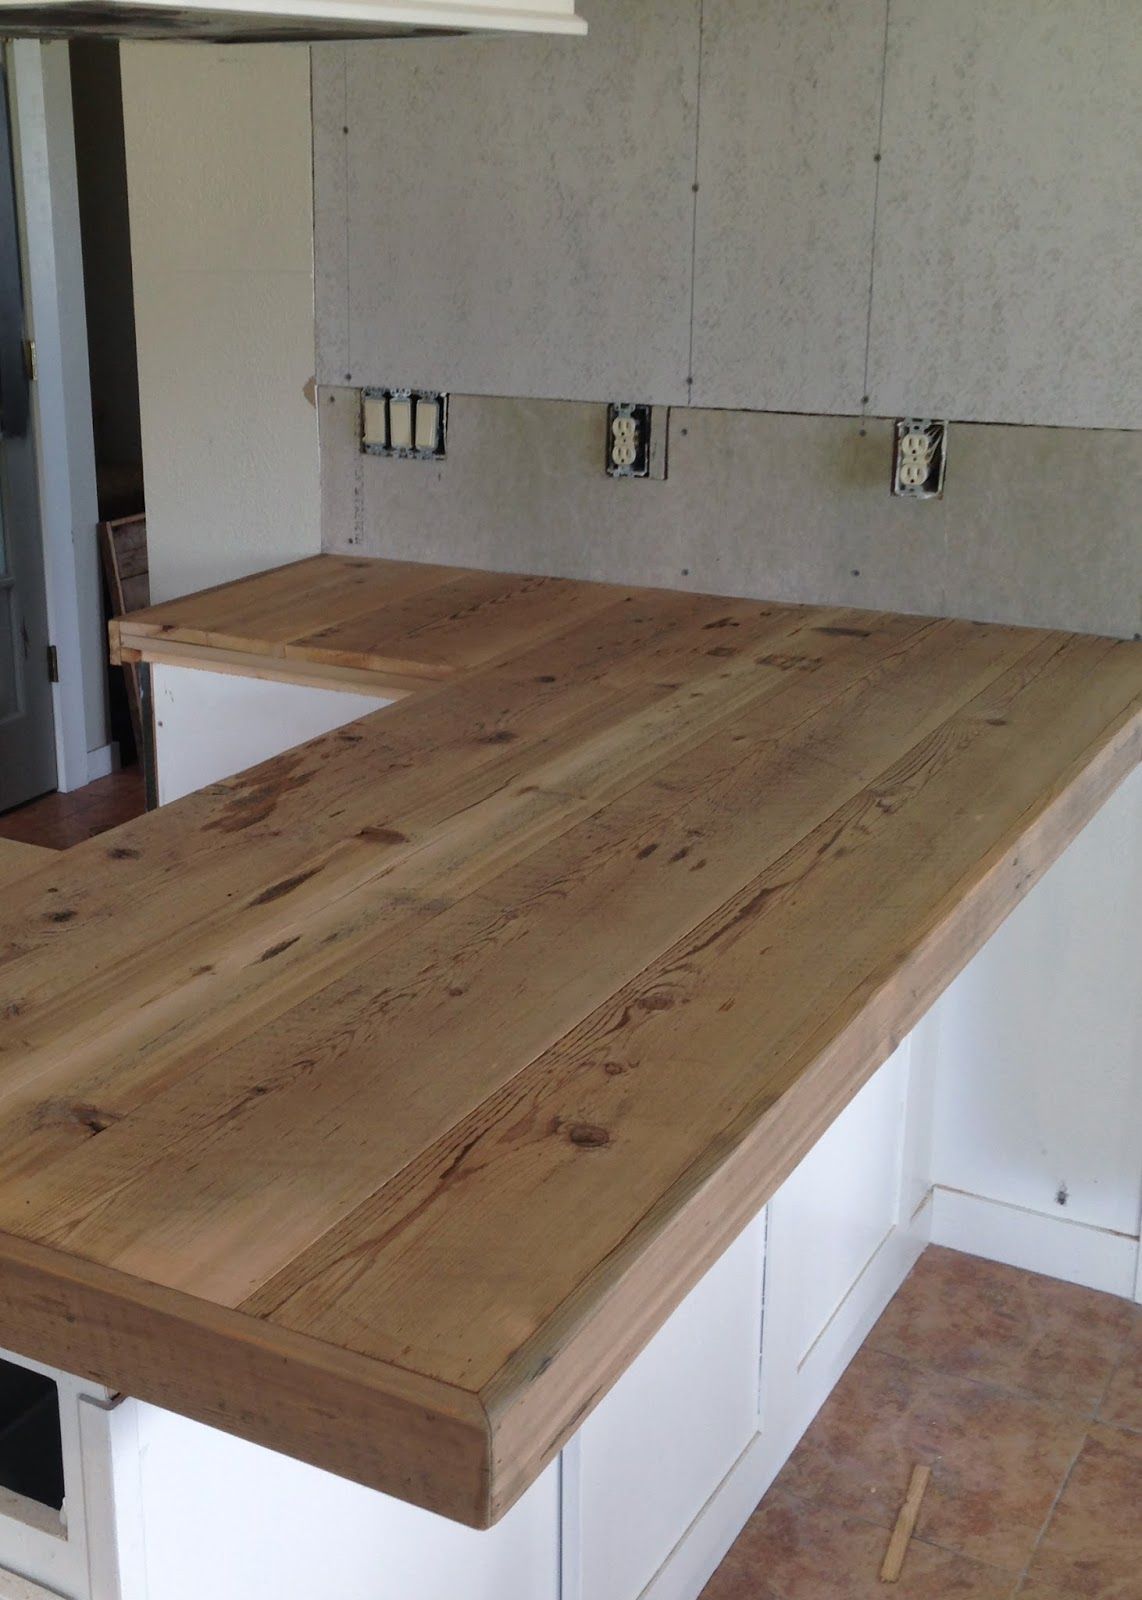 DIY Reclaimed Wood Countertop – adding trim boards along edge #diy_kitchen_worktop